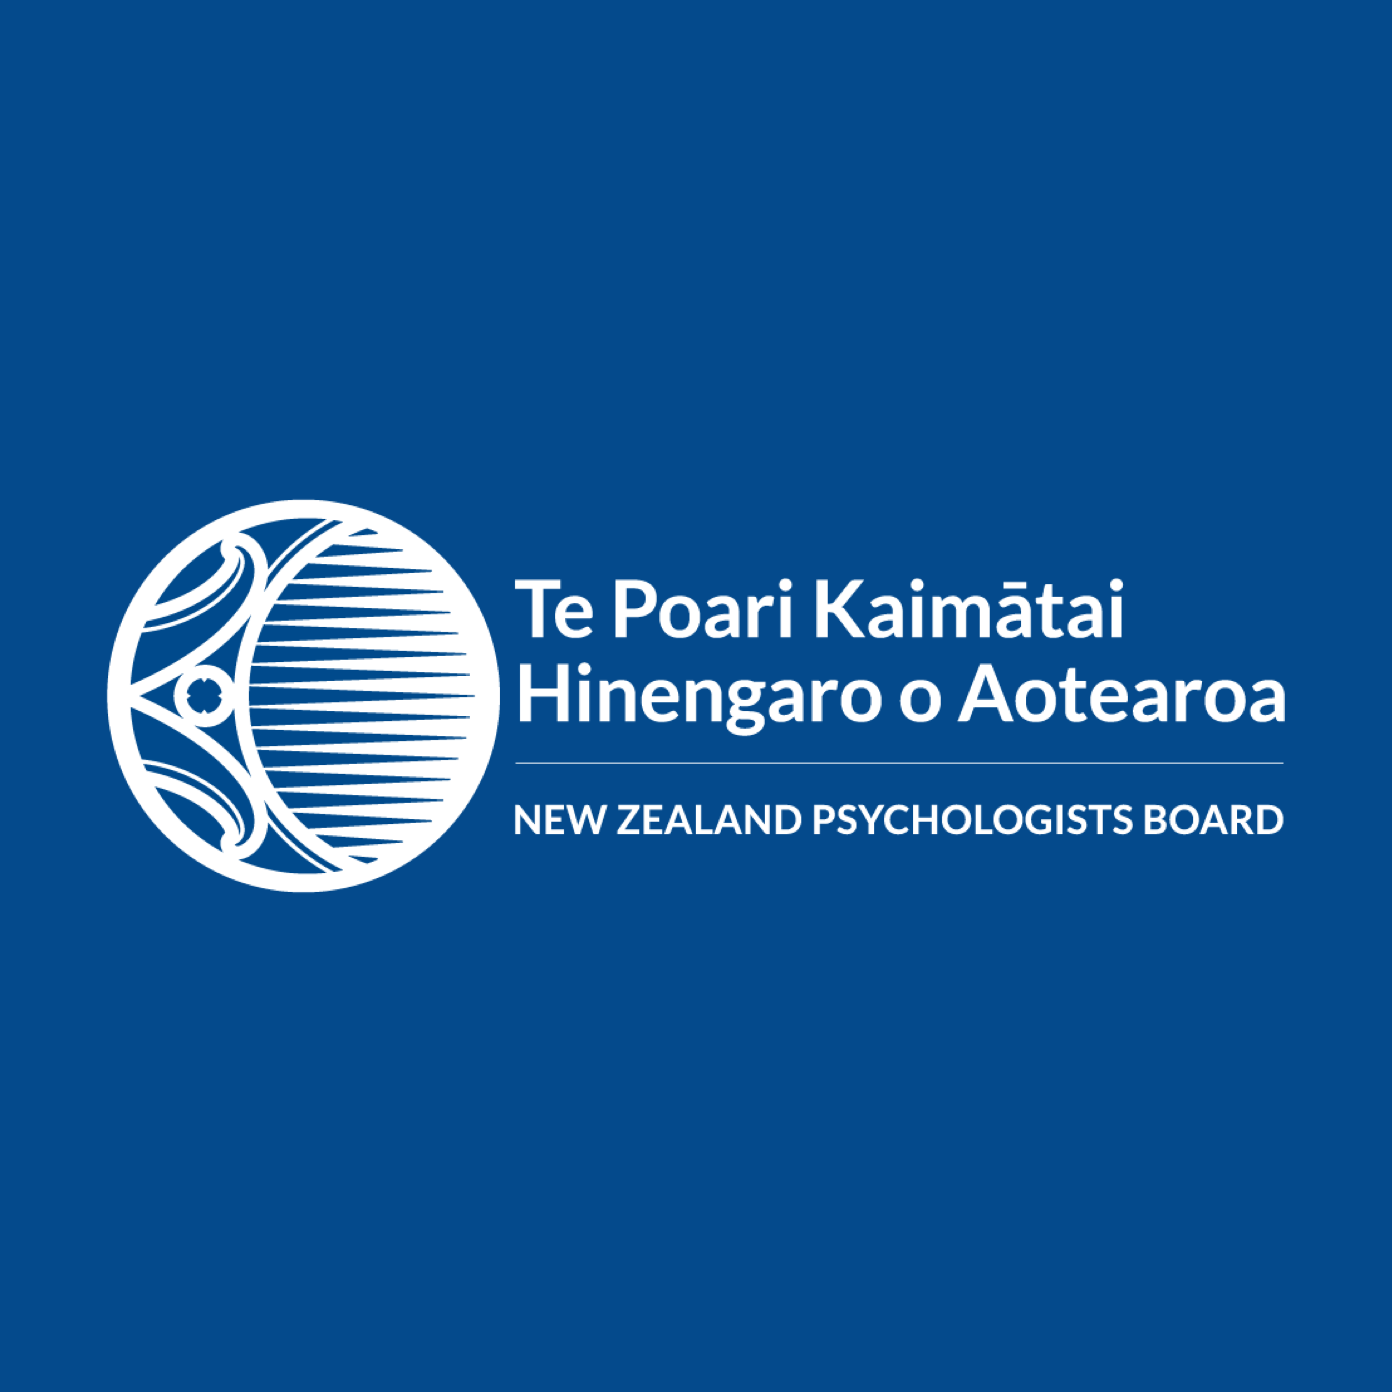 New Zealand Psychologists Board